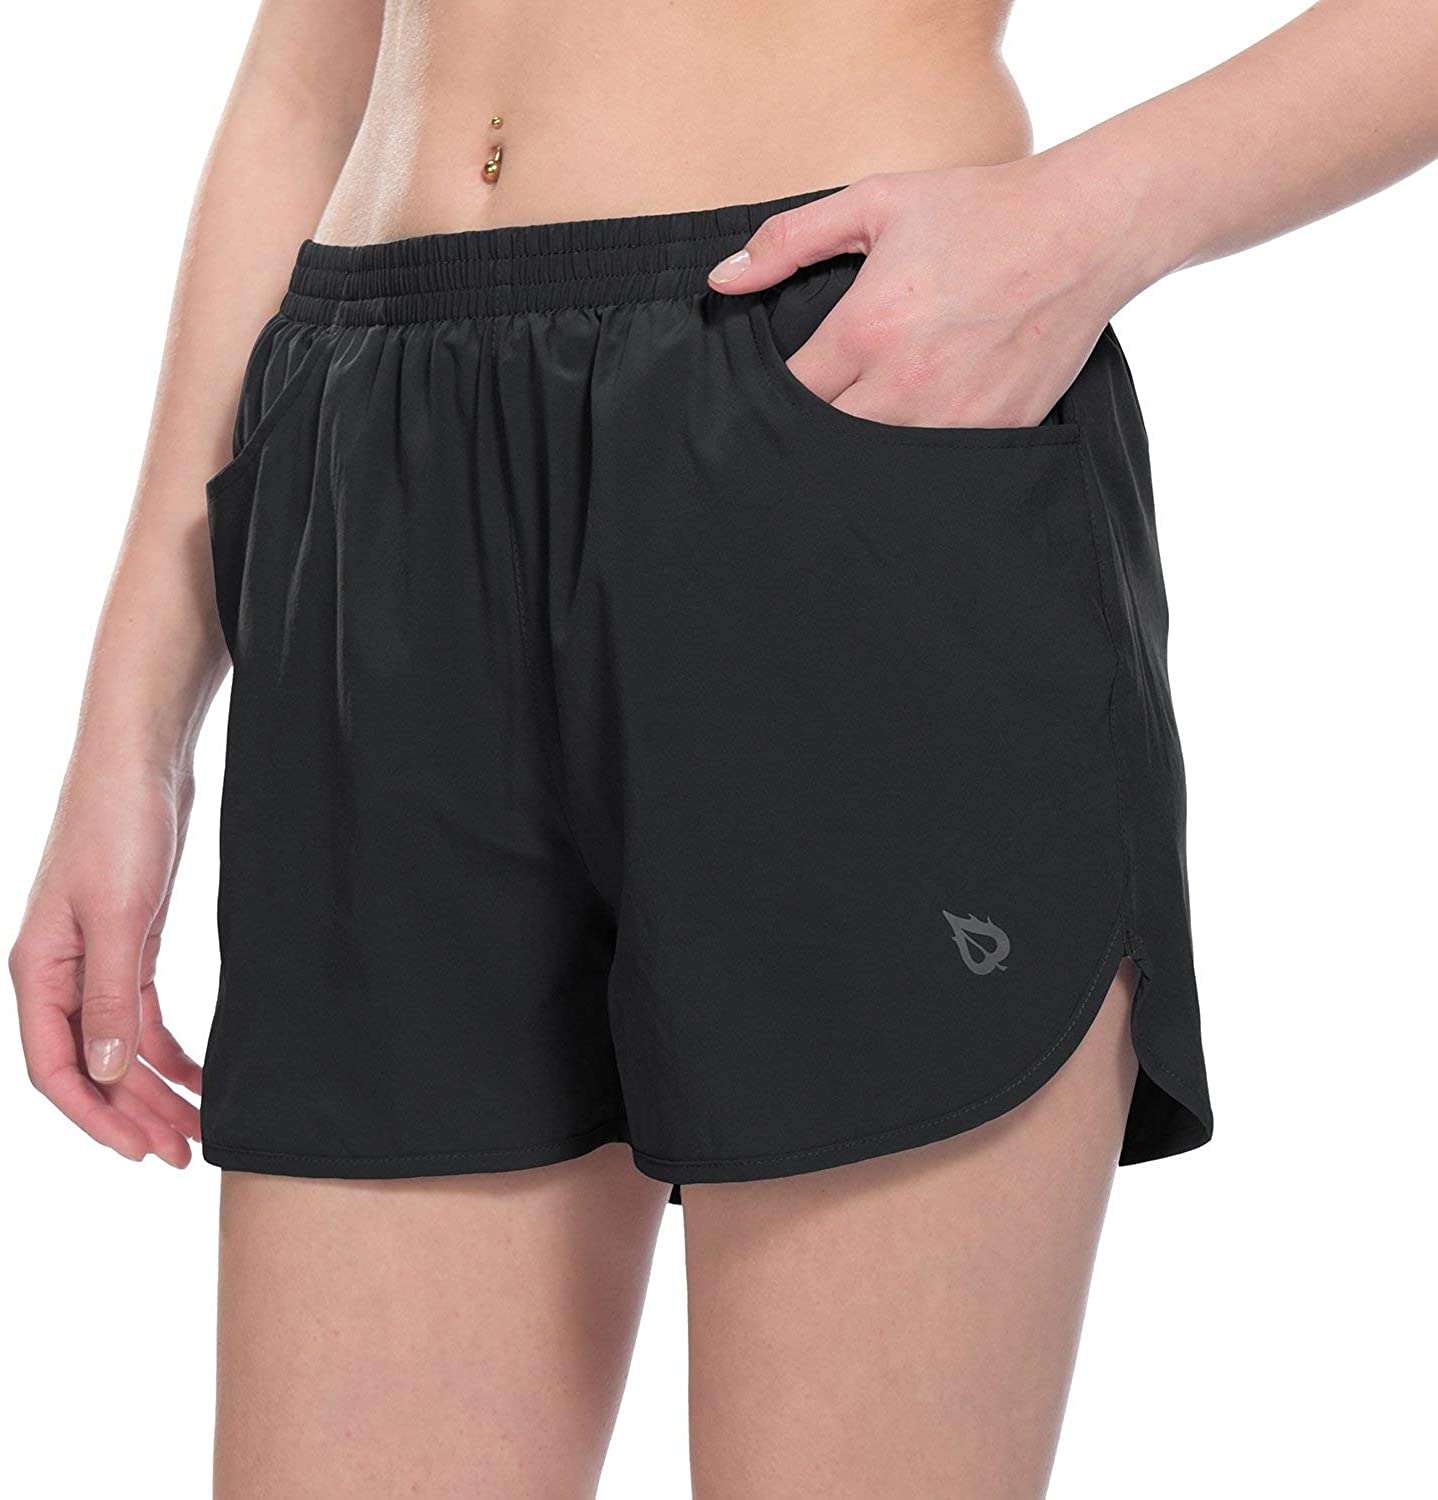 Baleaf women's lined mesh black athletic shorts high rise large - $18